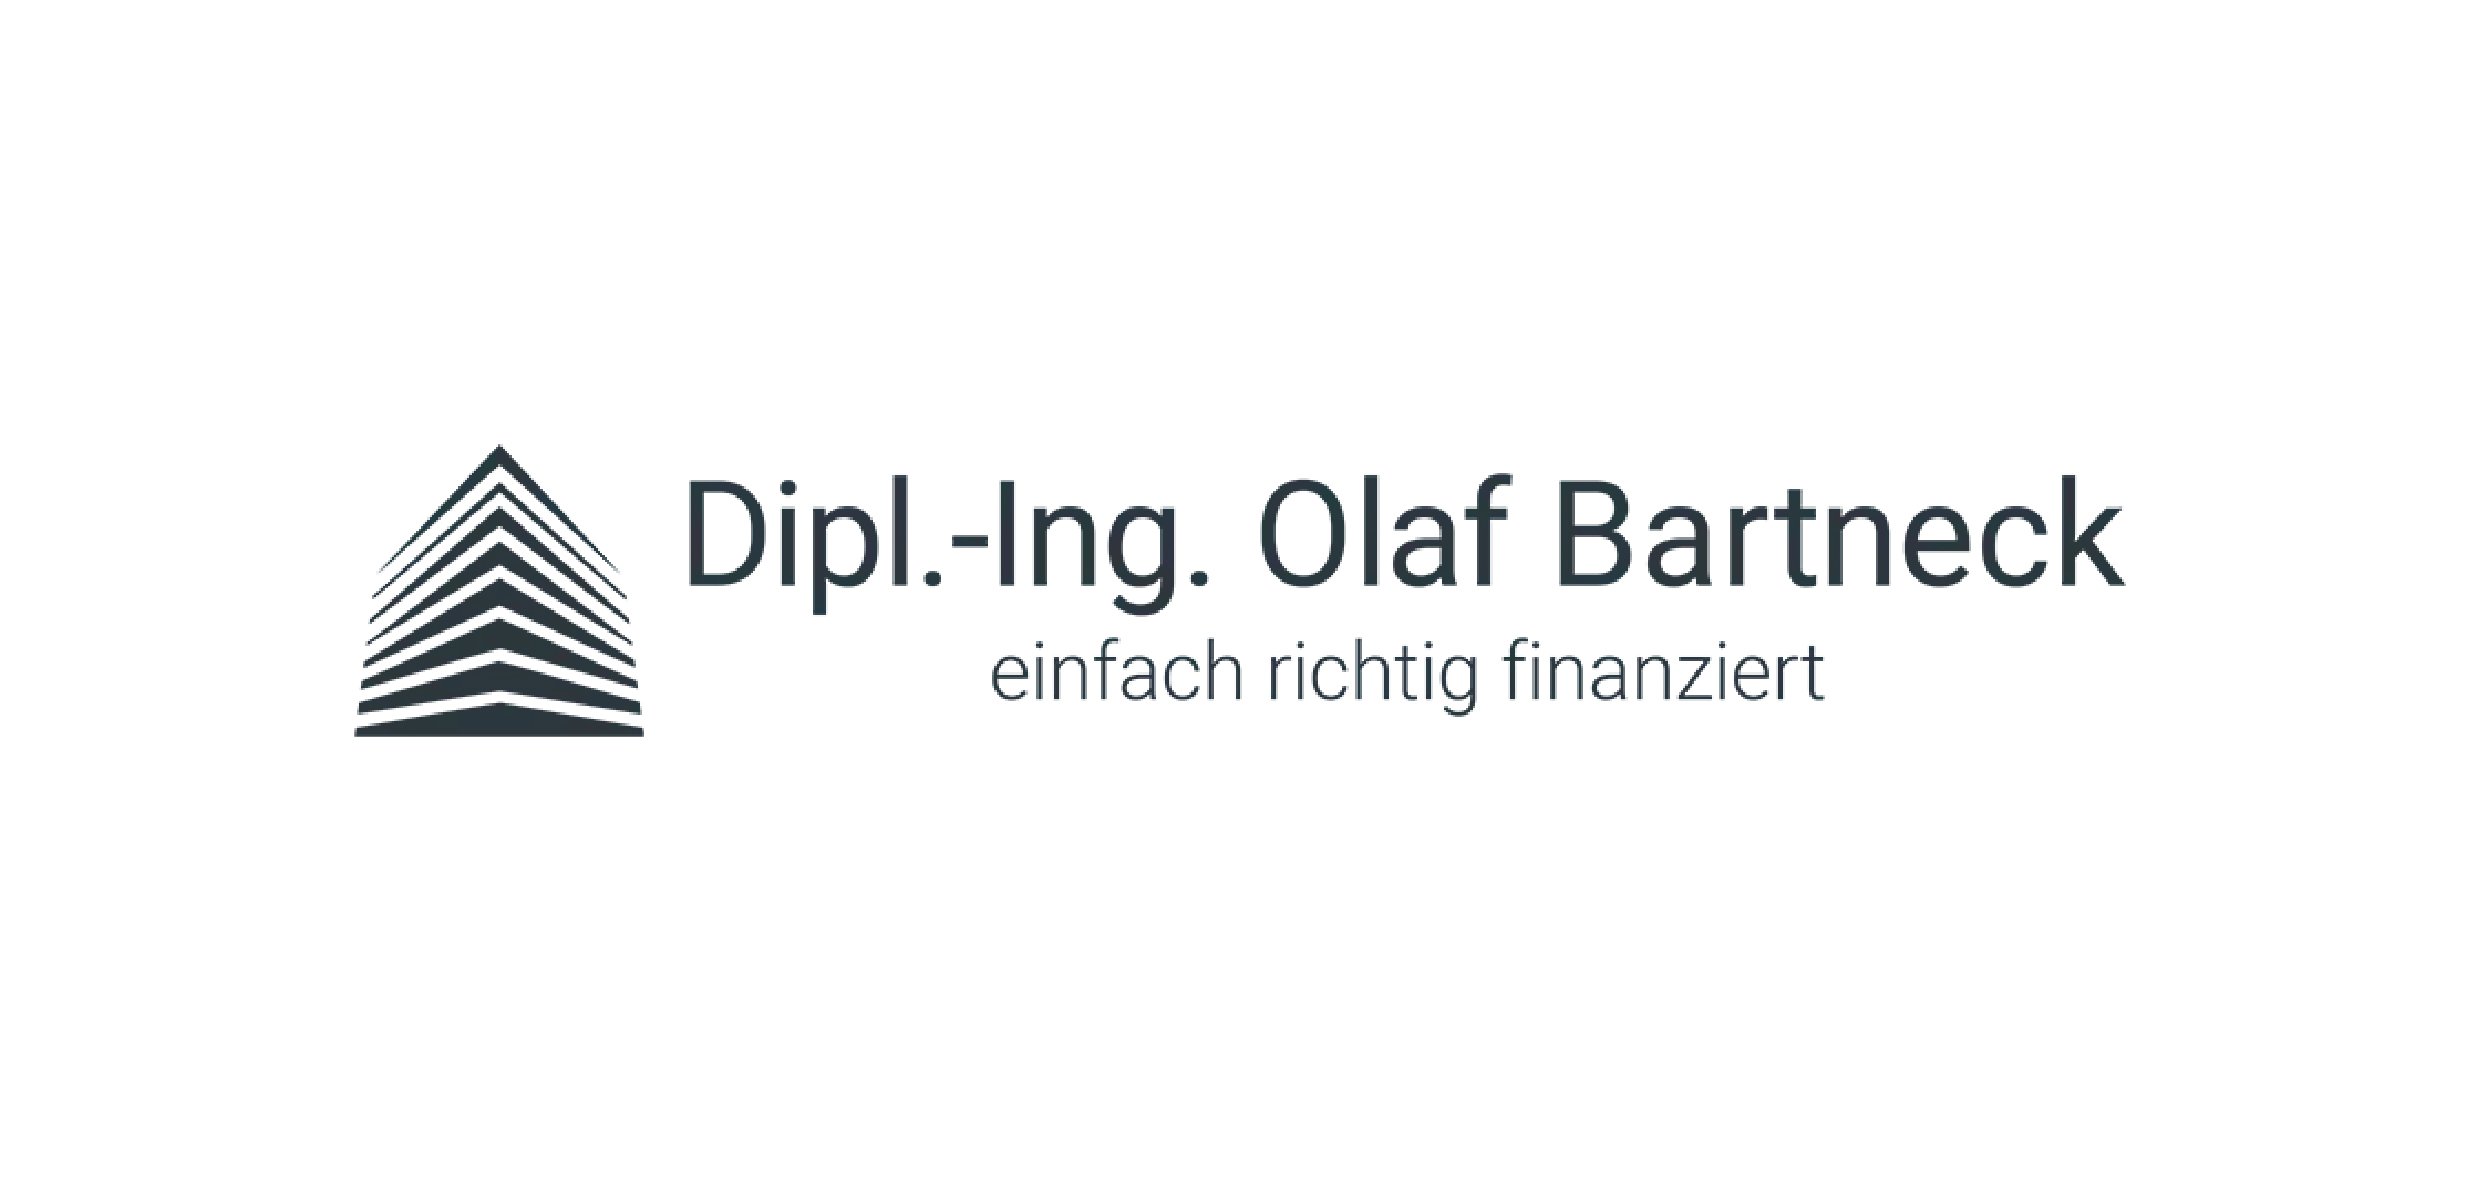 Dipl. Ing. Olag Bartneck - Webdesign